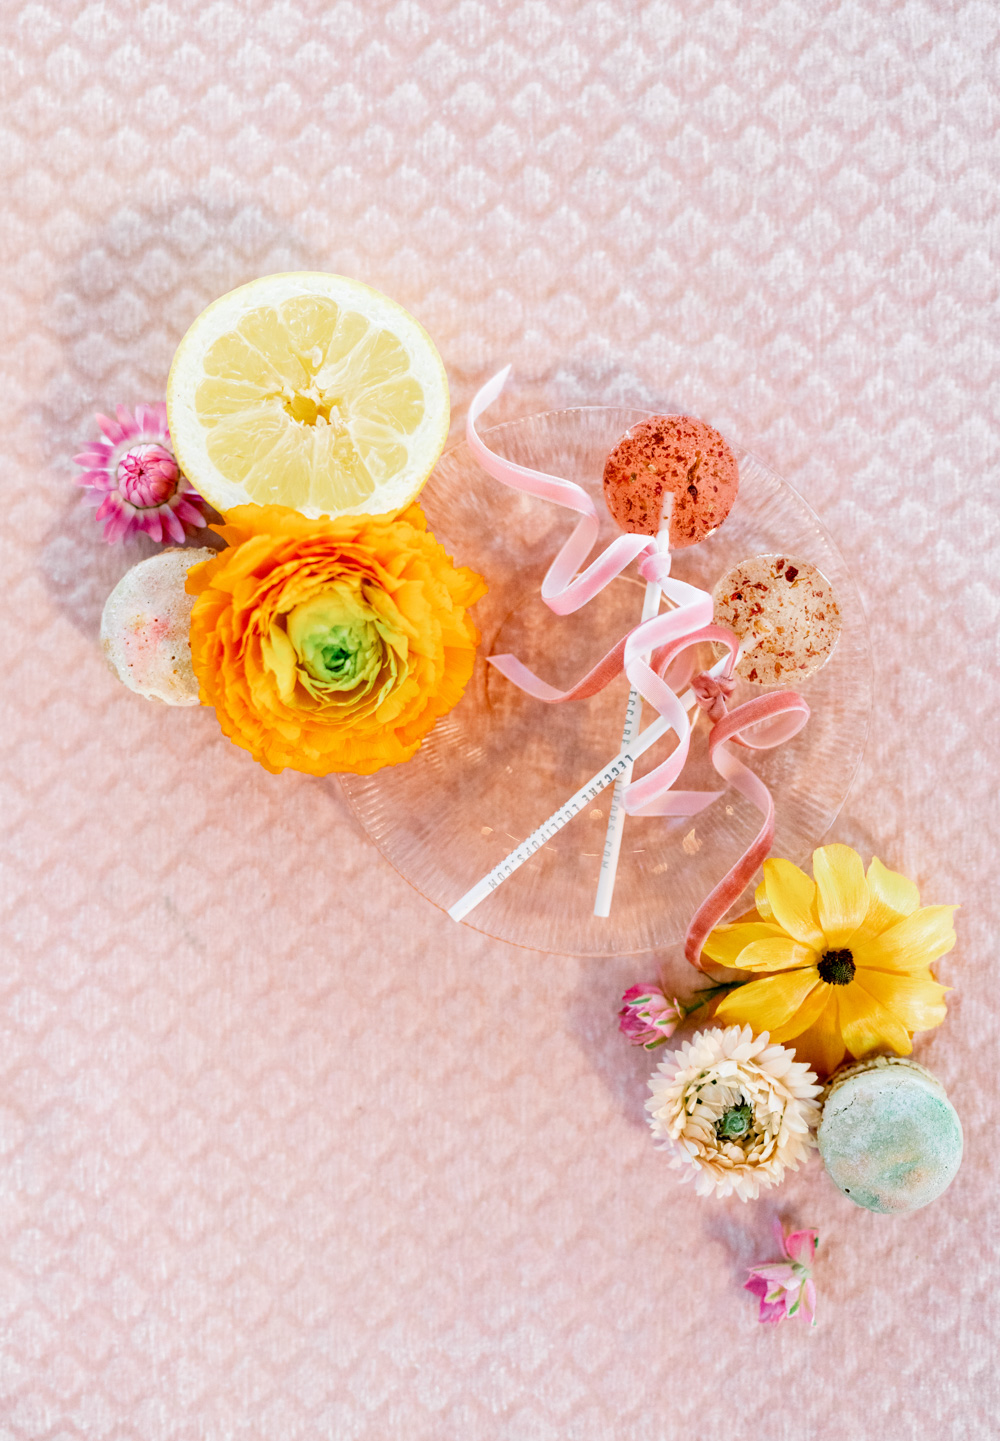 Gourmet lollipops by Leccare Lollipops